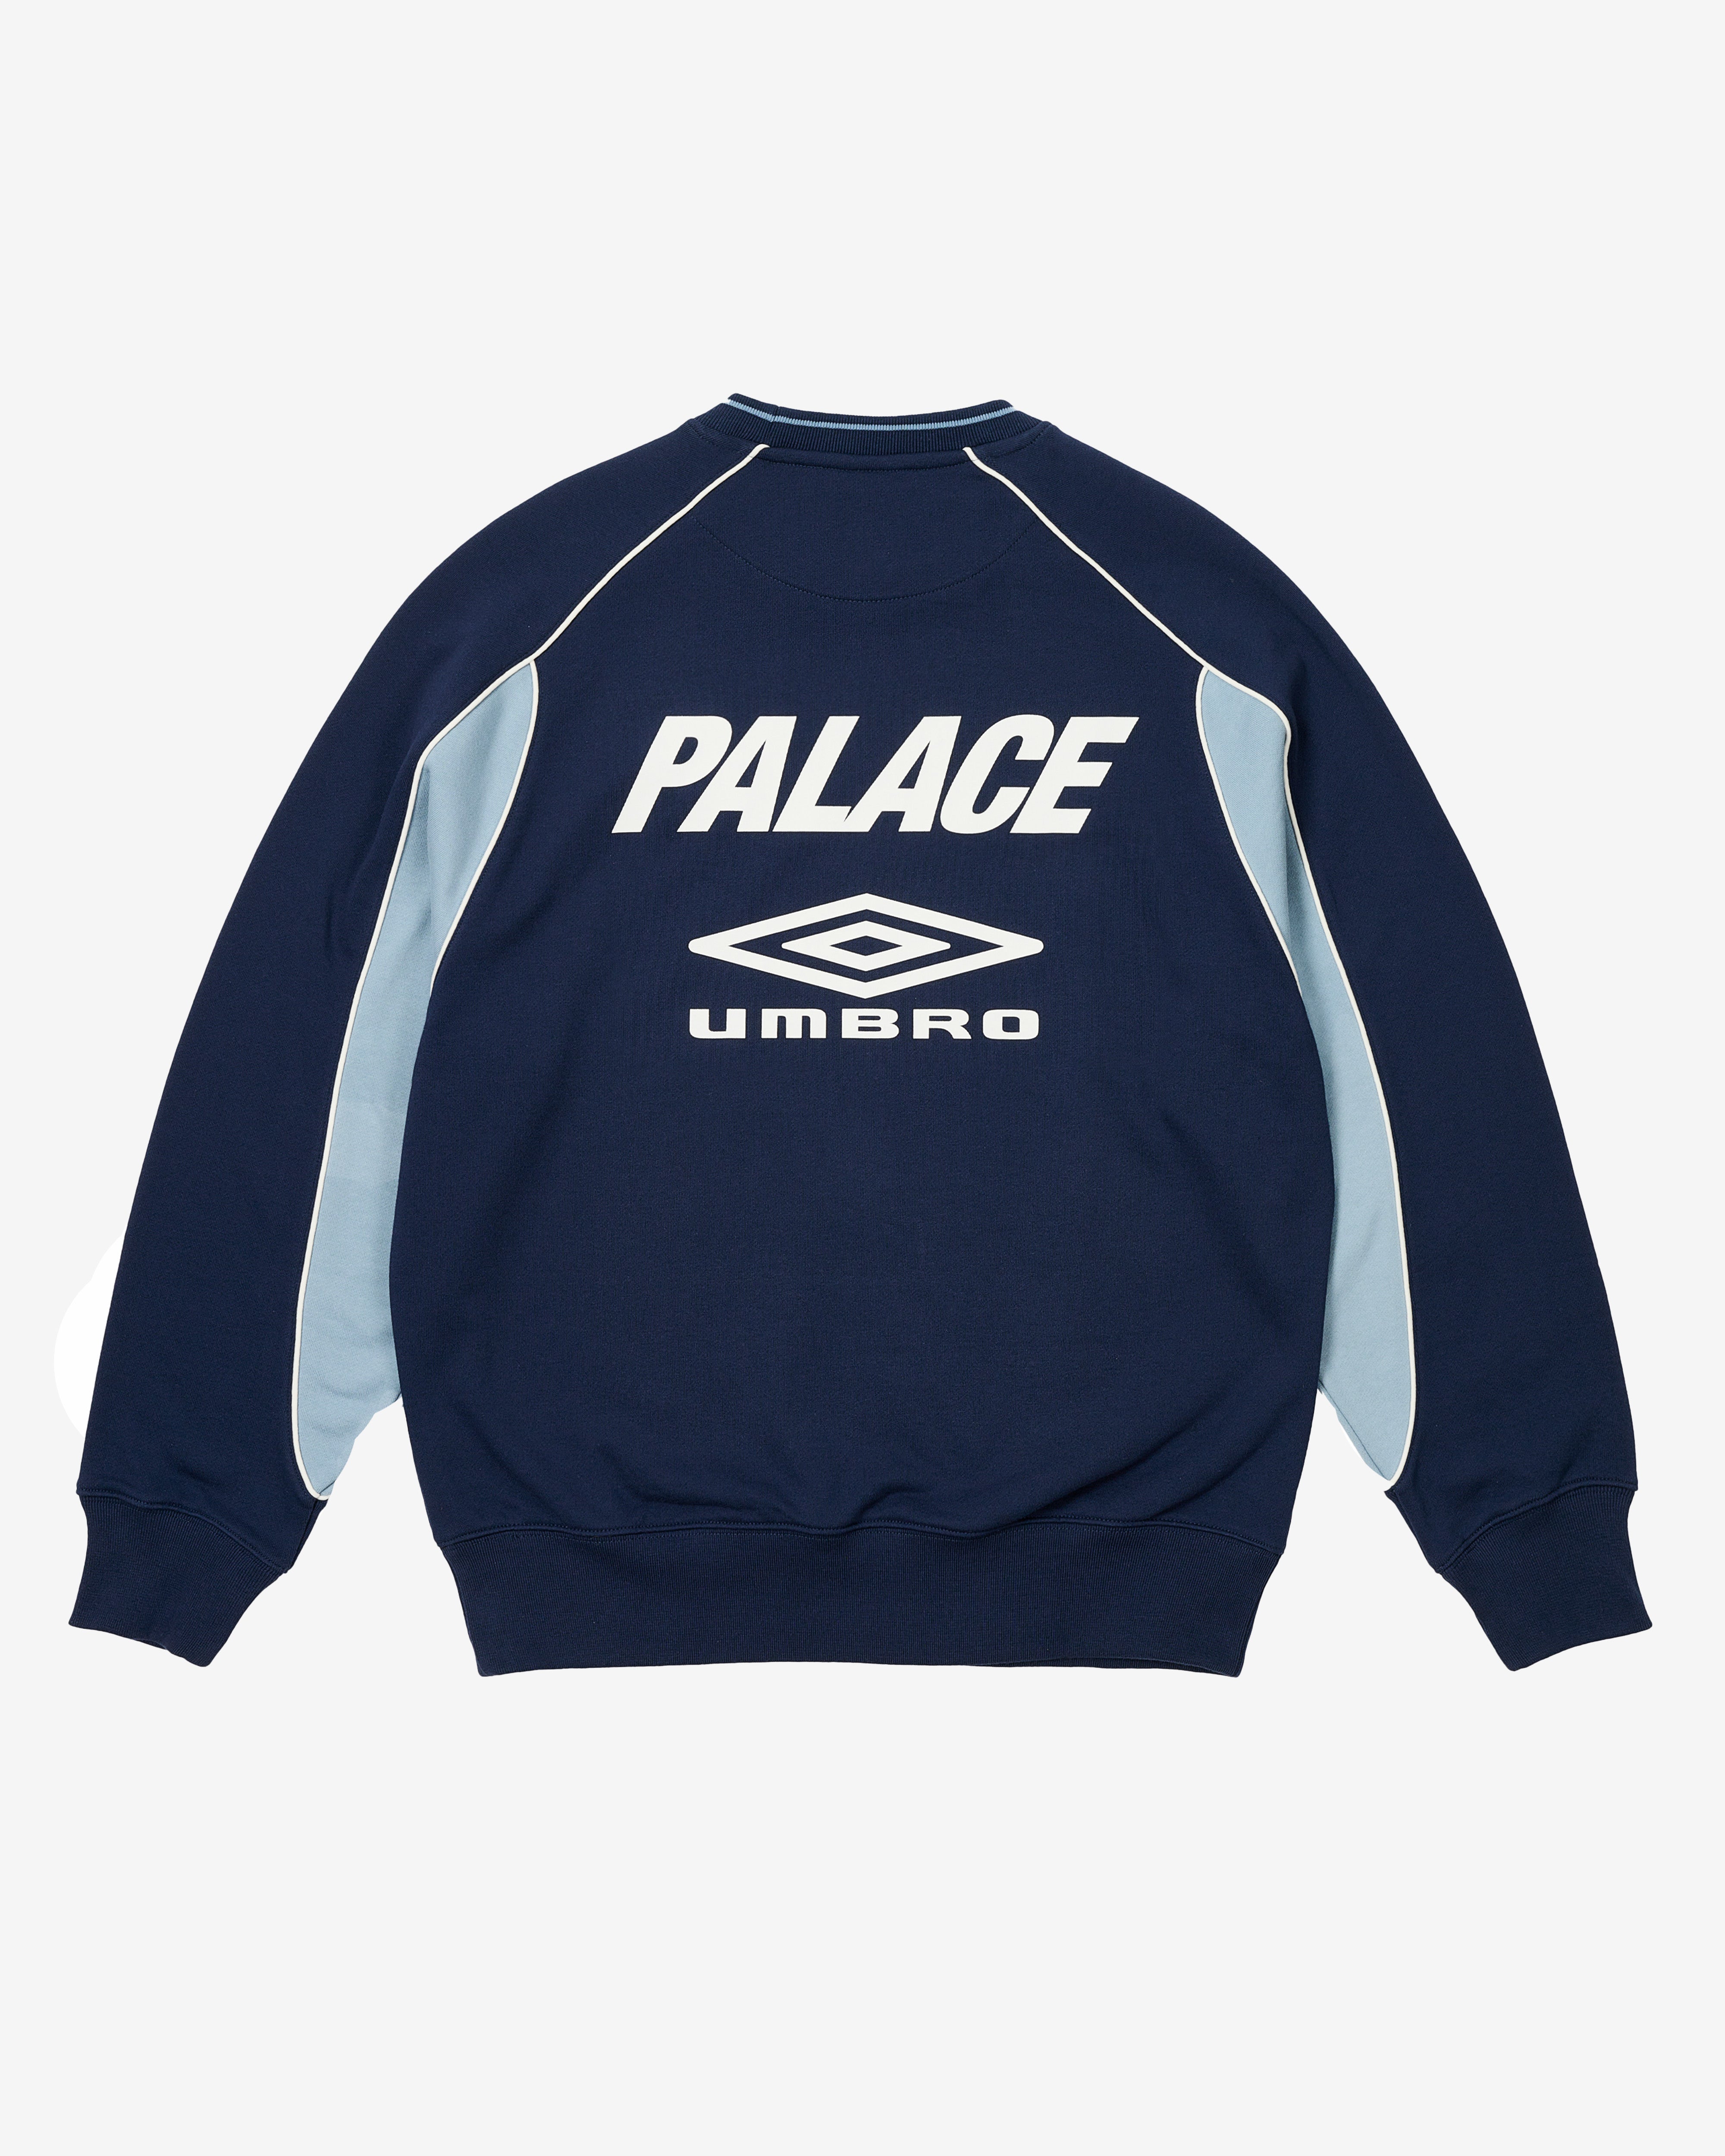 Palace - Men's Palace Umbro Warm Up Crew - (Blue)